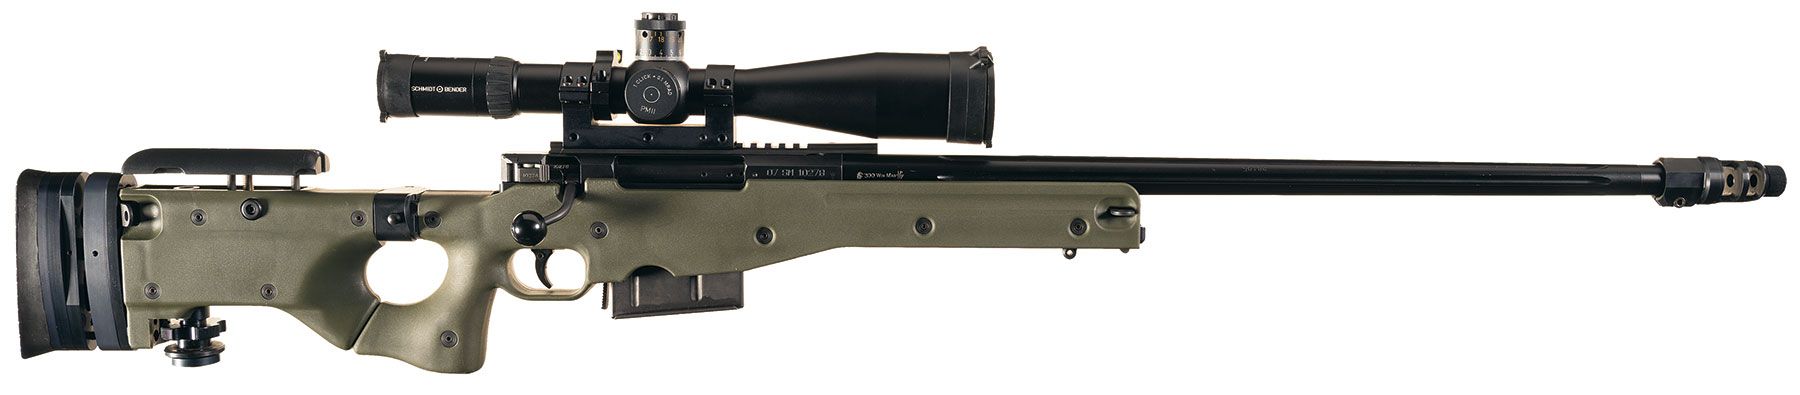 Accuracy International Super Magnum Bolt Action Sniper Rifle